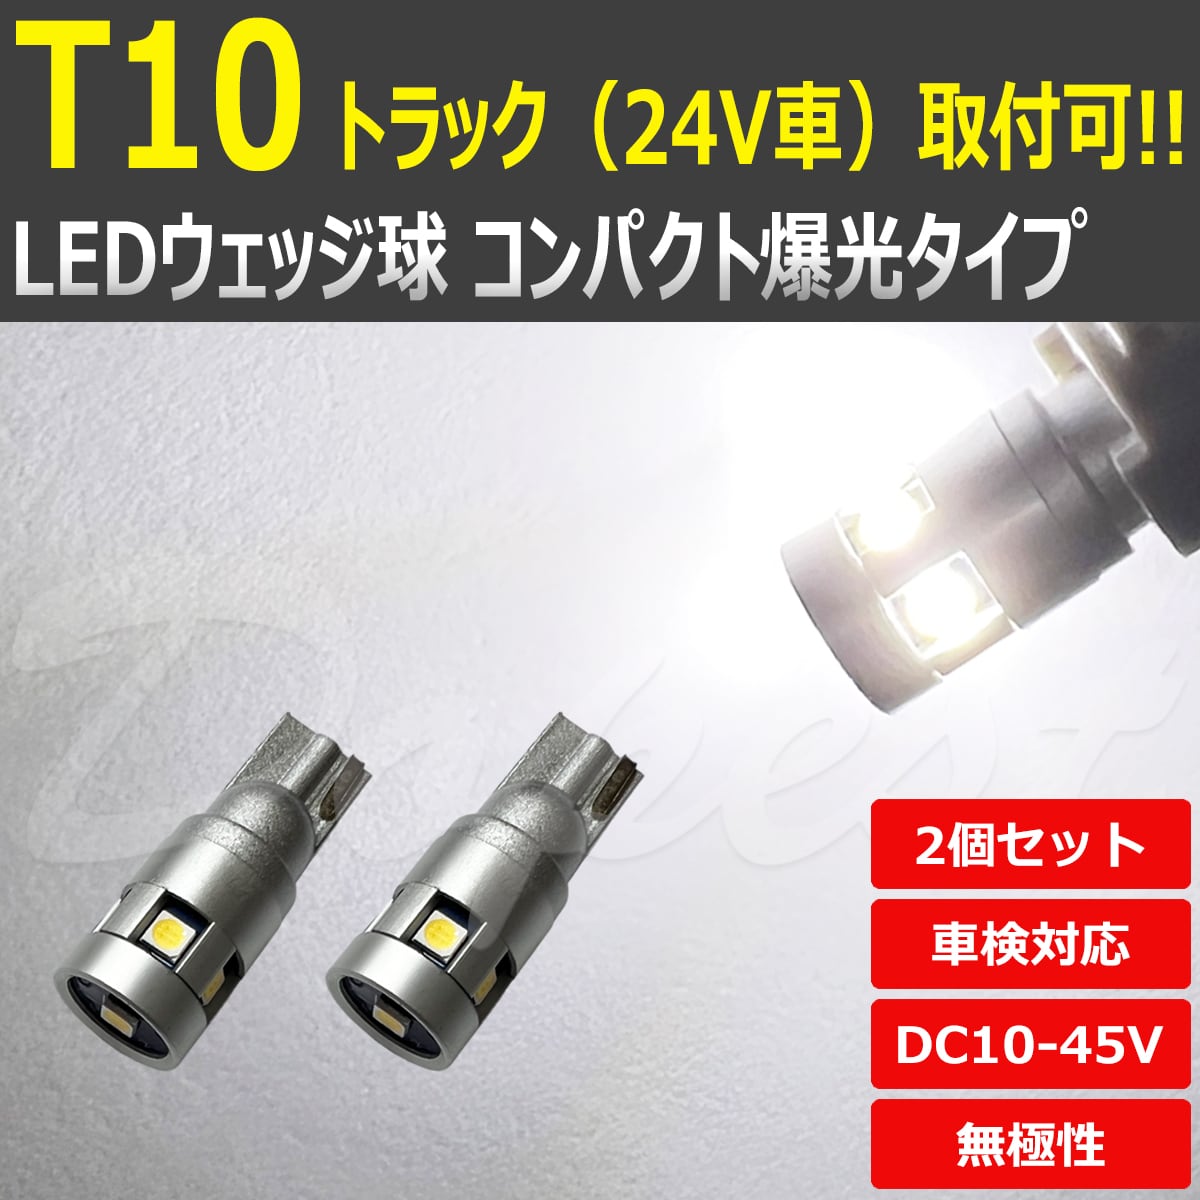 【17スーパーグレート】24V 爆光 LED ルーム＋ナンバー LEDセット